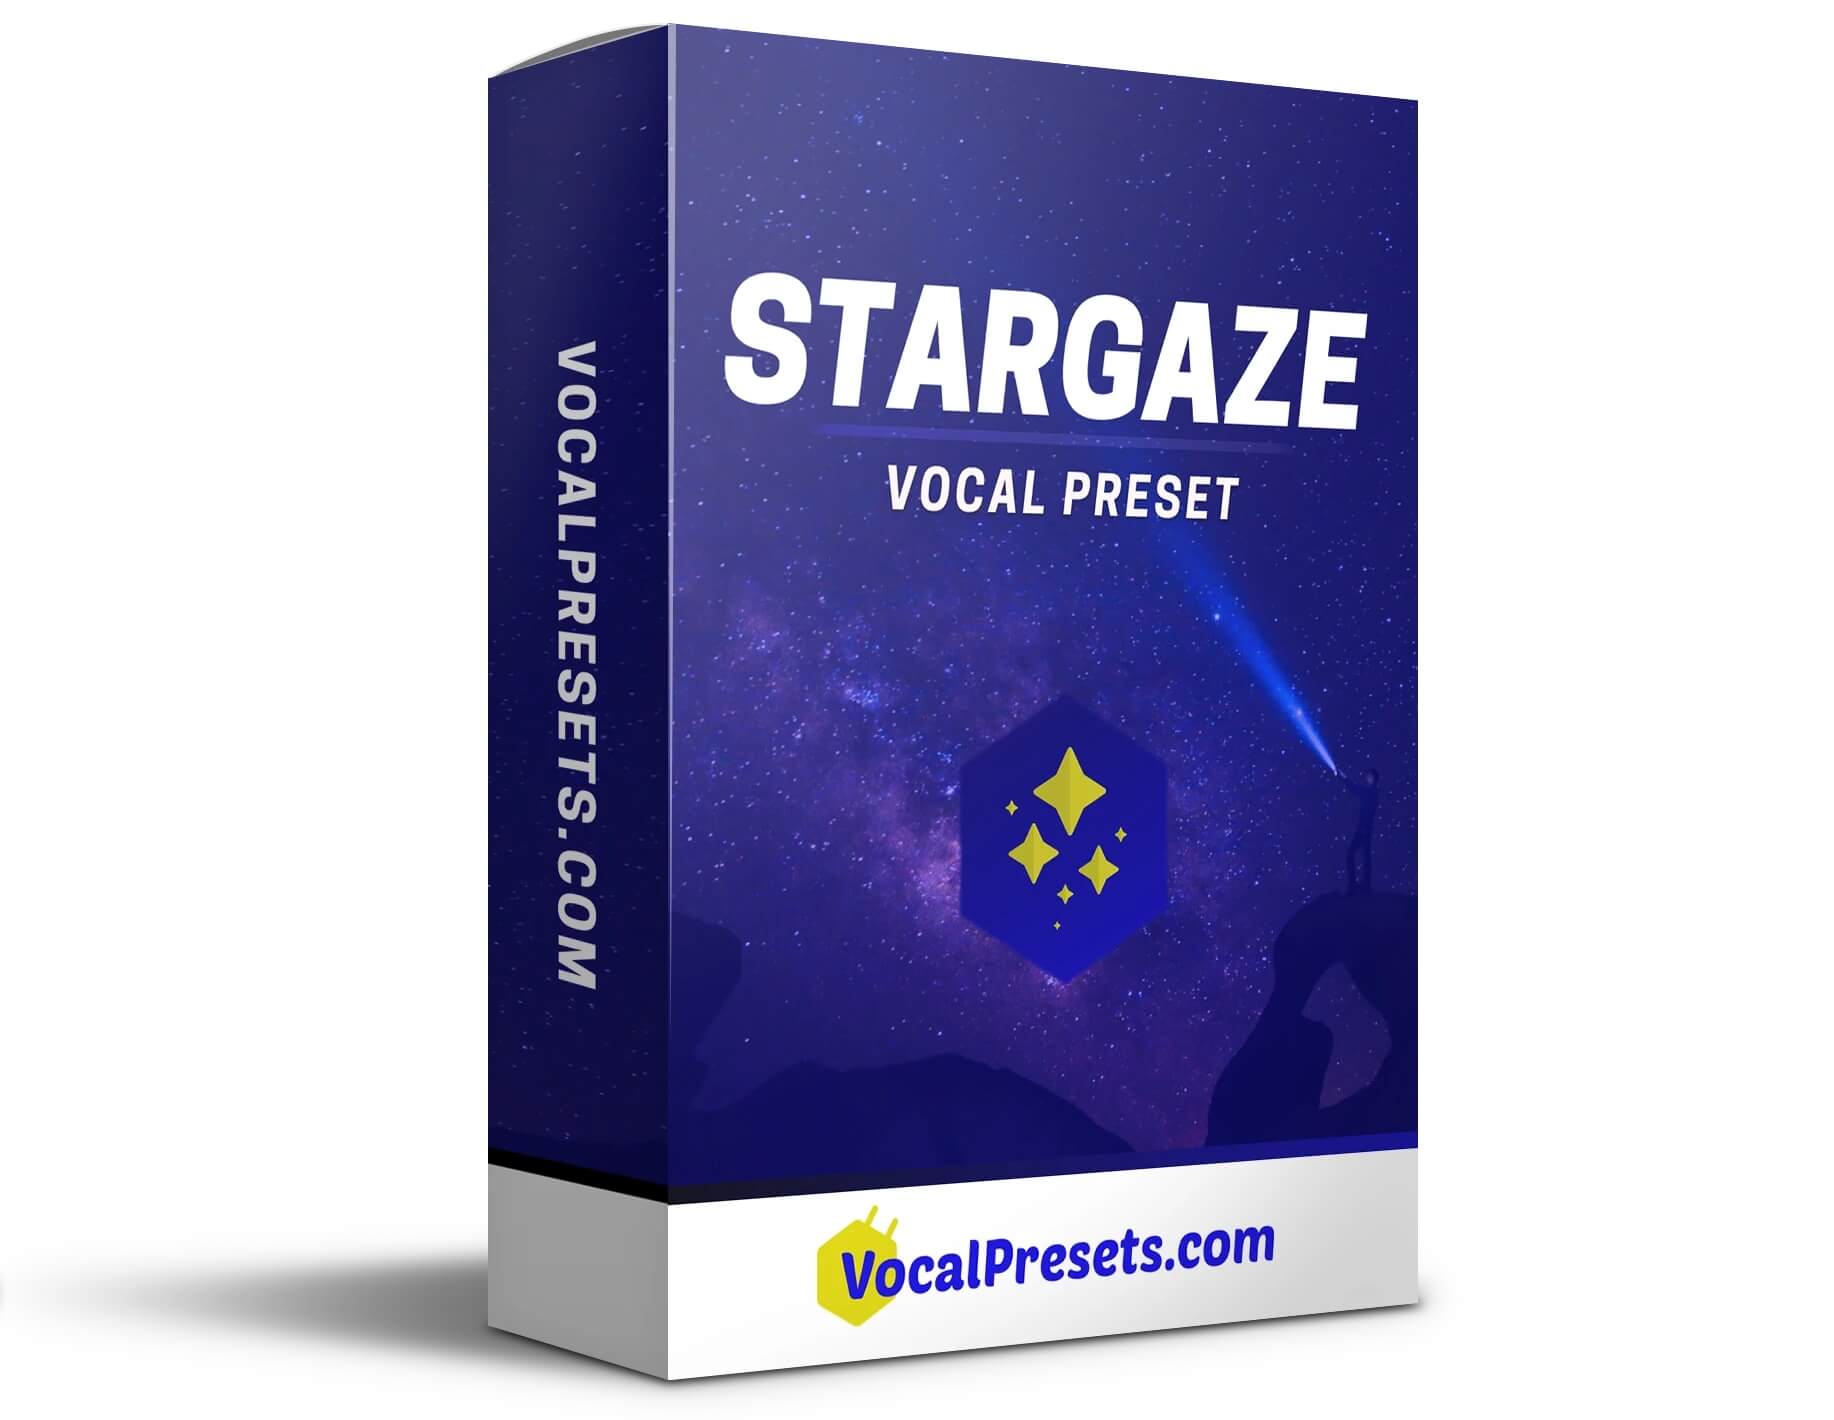 fl studio free vocal presets